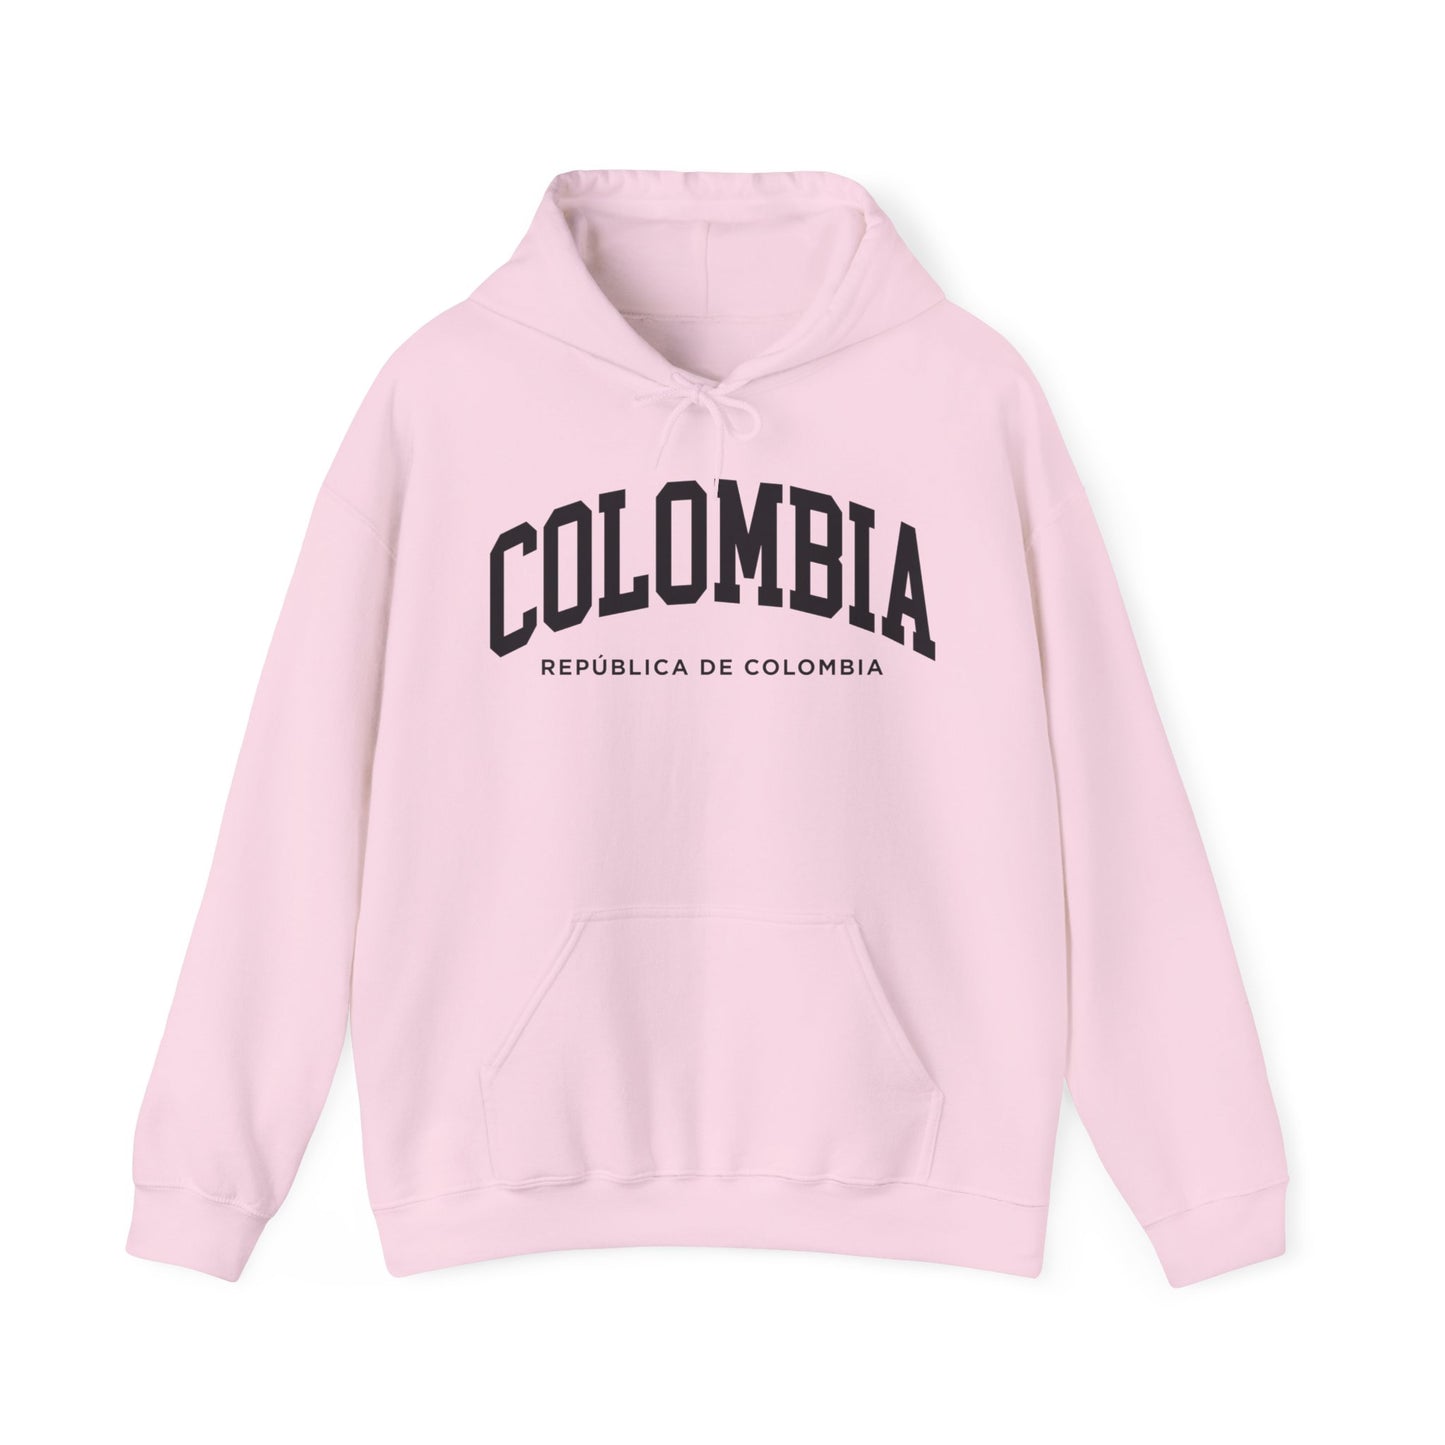 Colombia Hoodie